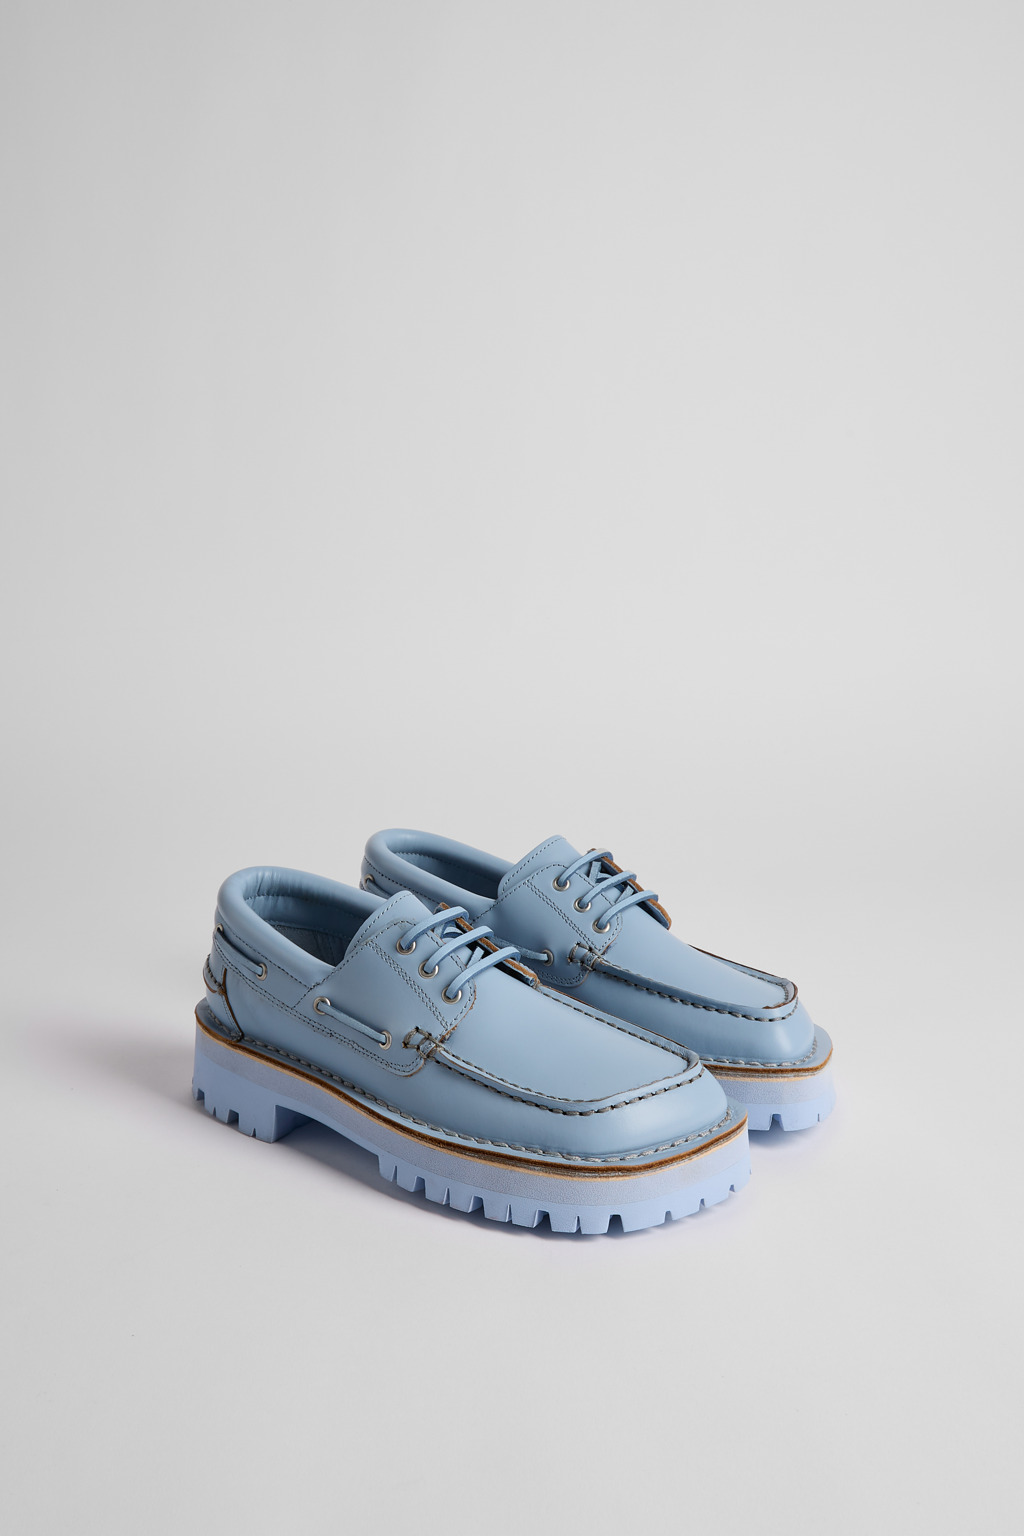 Eki Blue Formal Shoes for Women - Spring/Summer collection 